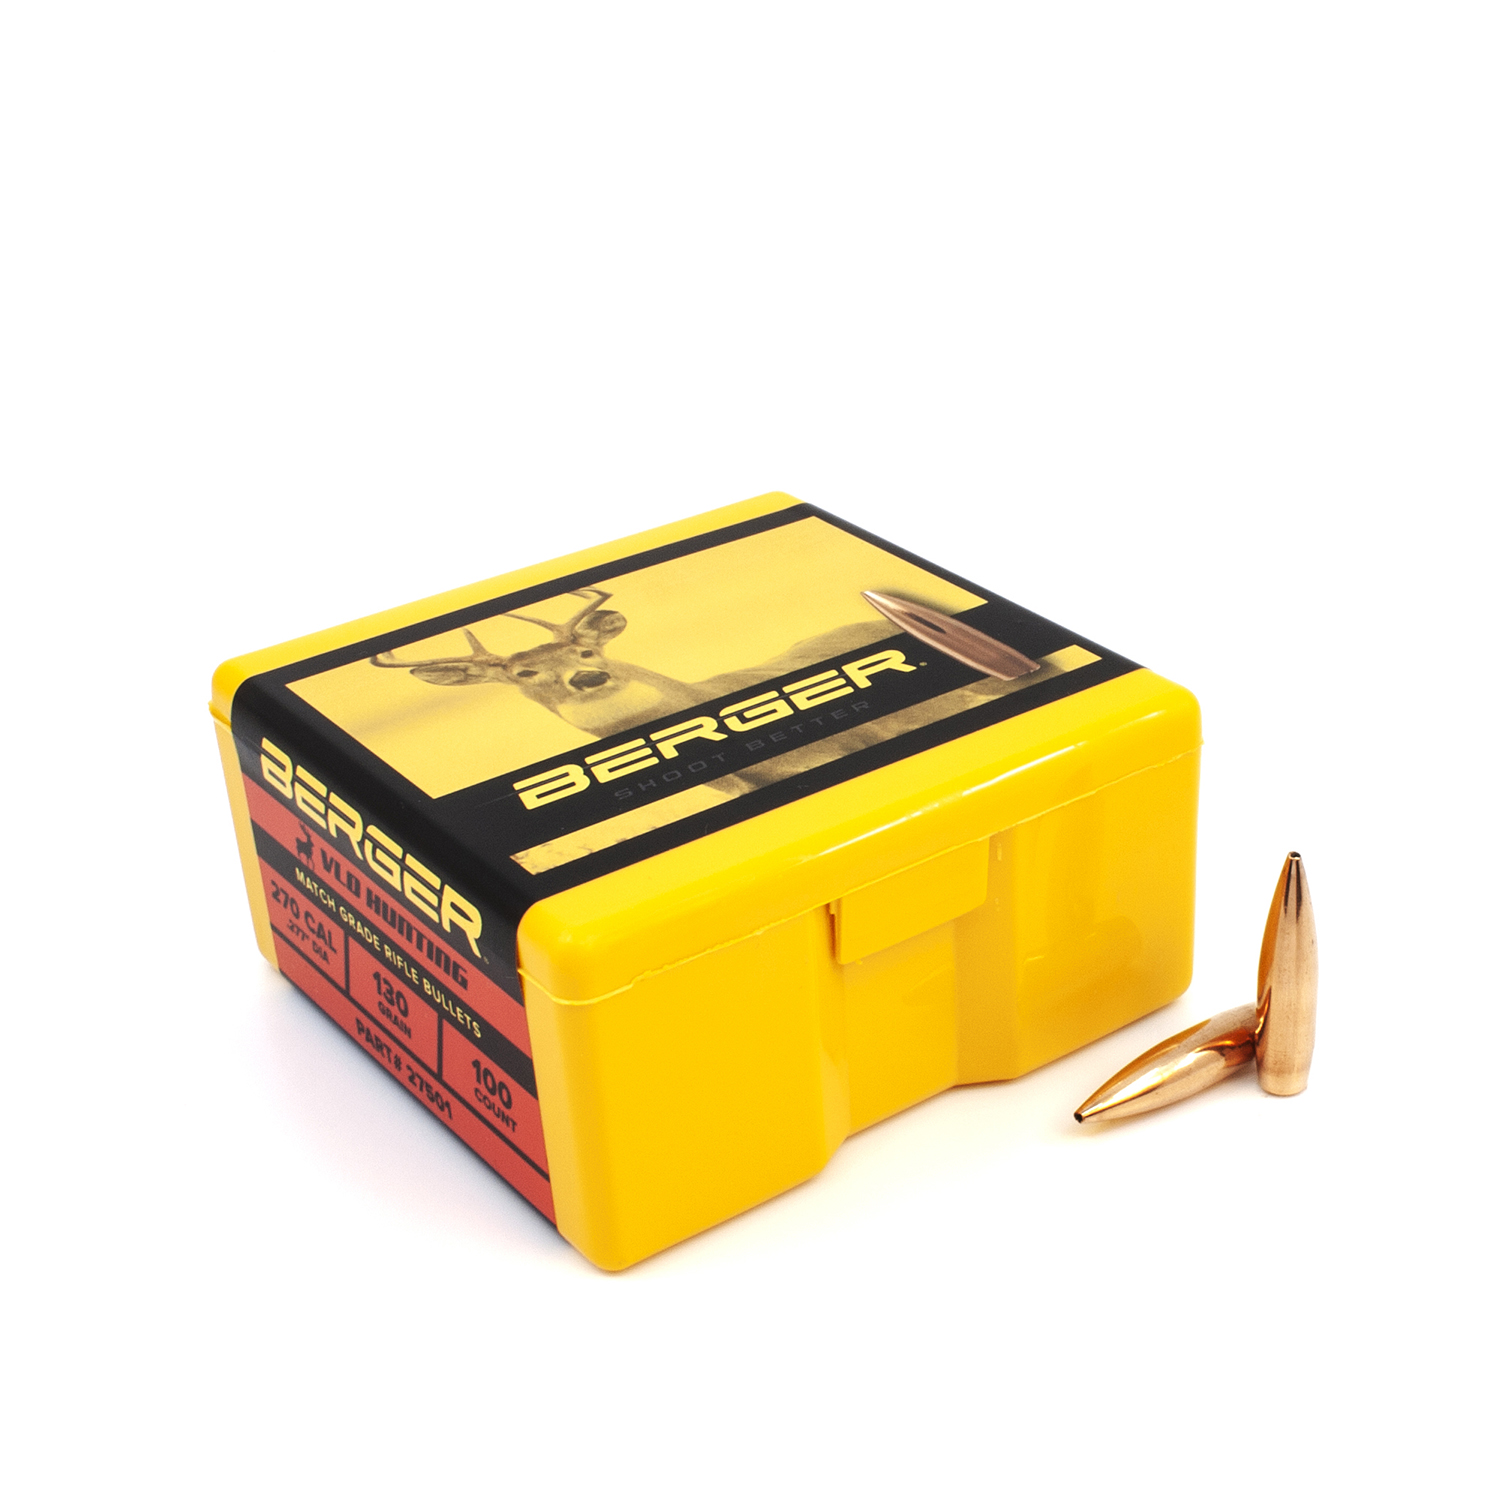 Berger Bullets - .270 cal, 130 gr. VLD Hunting - Box of 100